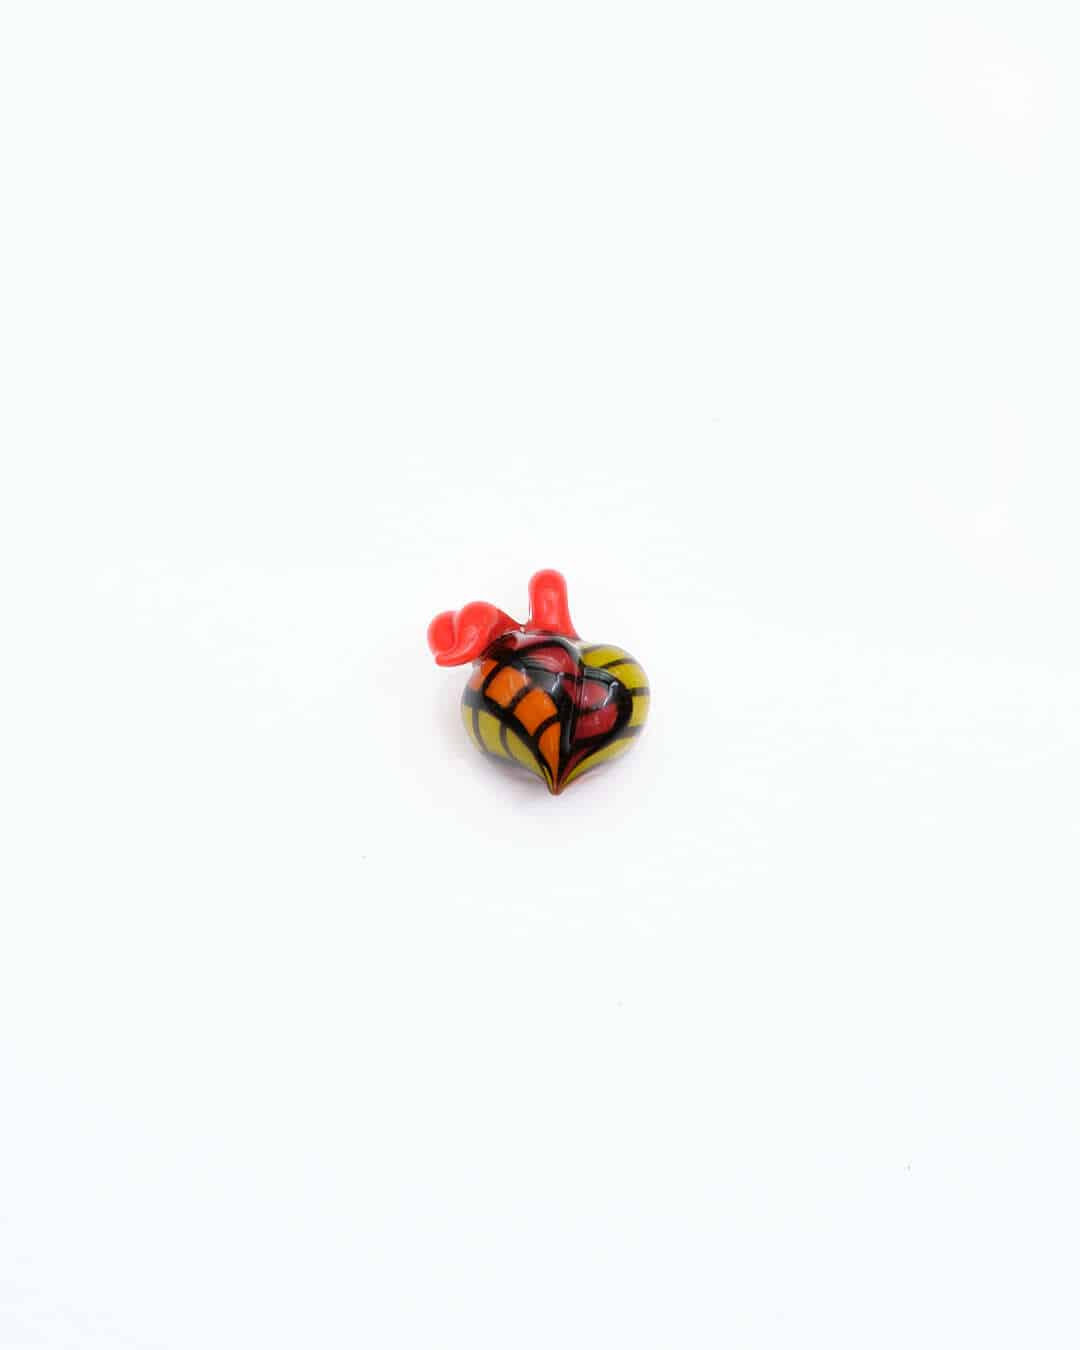 artisan-crafted glass pendant - (21C) Red/Orange/Yellow Reticello Peach Pendant by Gnarla Carla